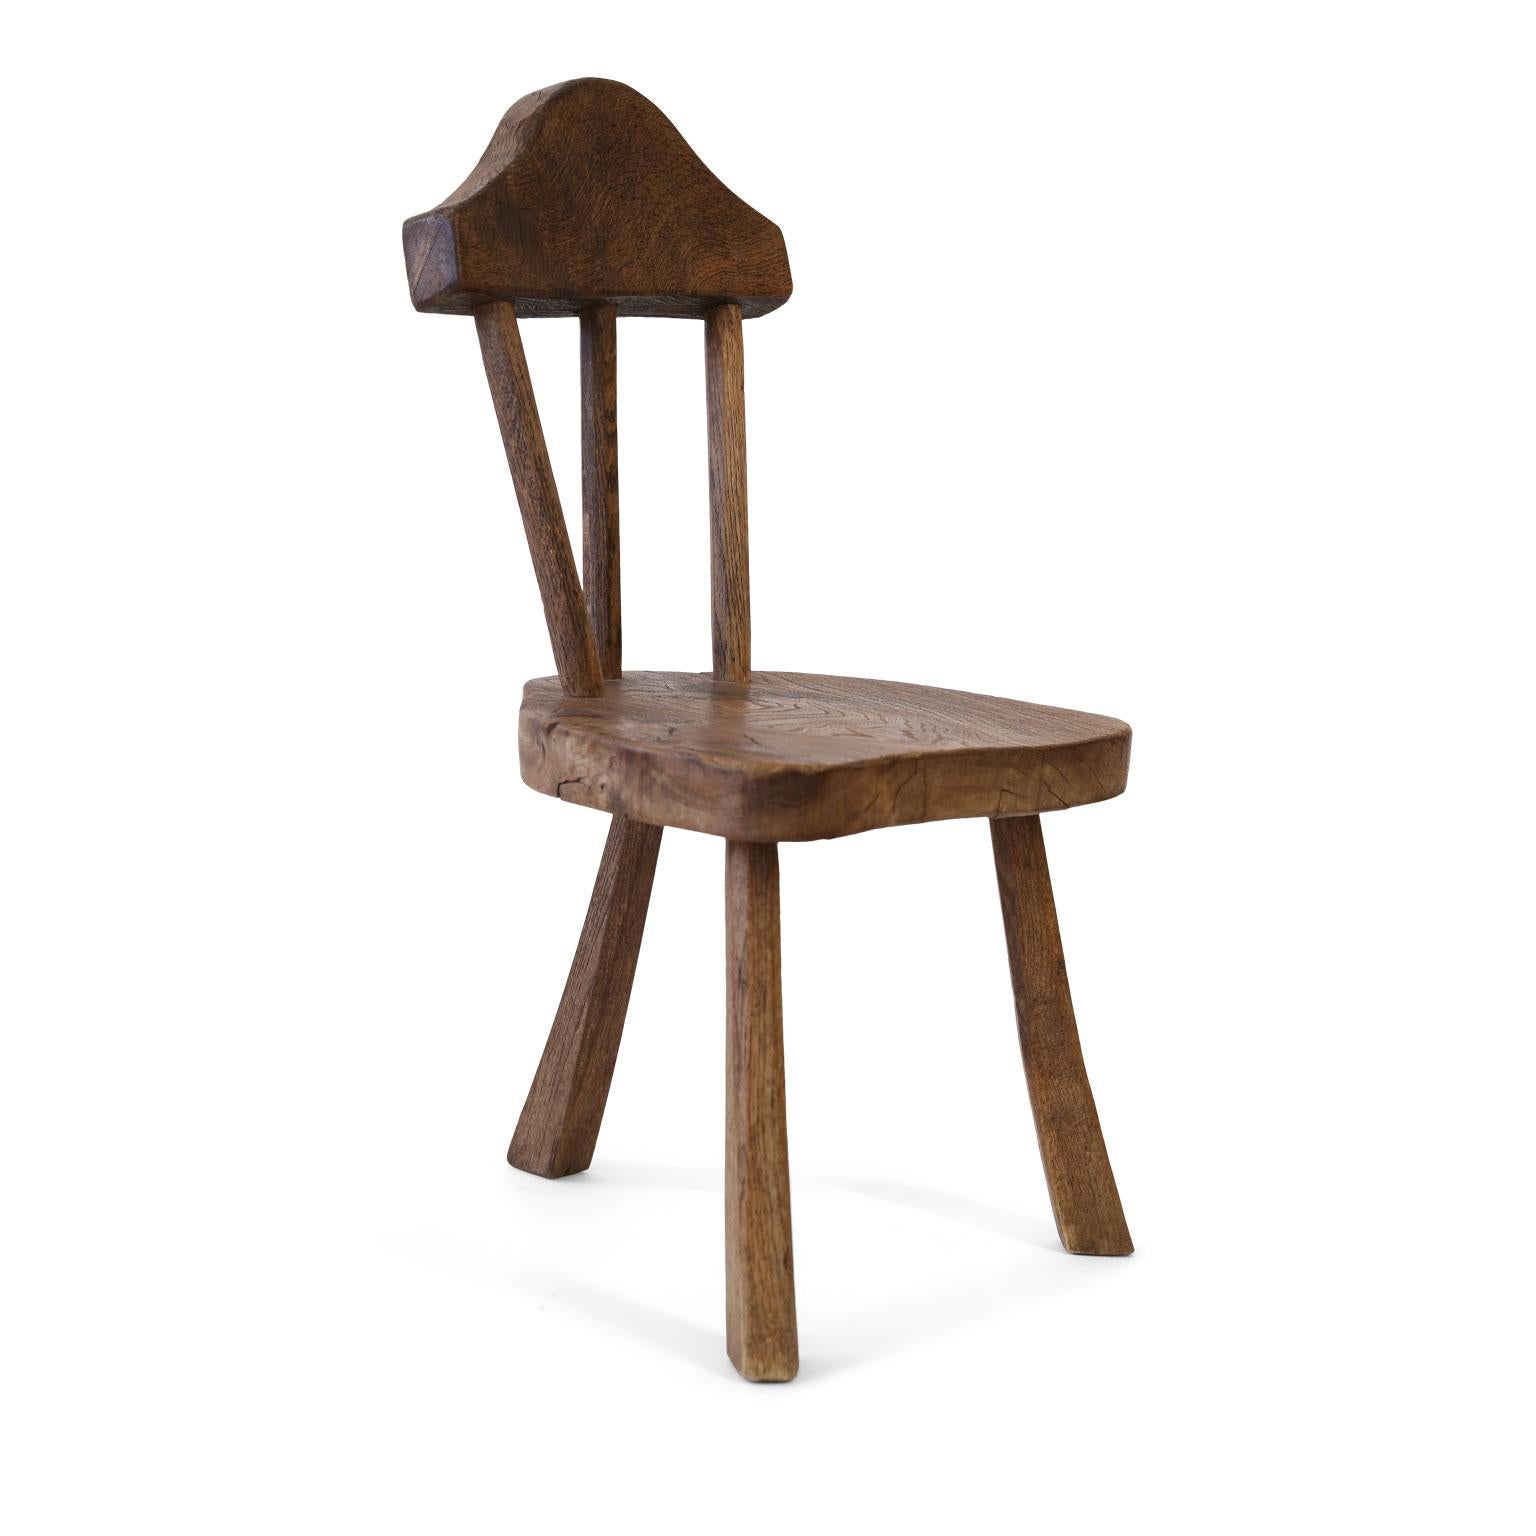 Primitive Stick Back Chair in Mid-Brown Oak